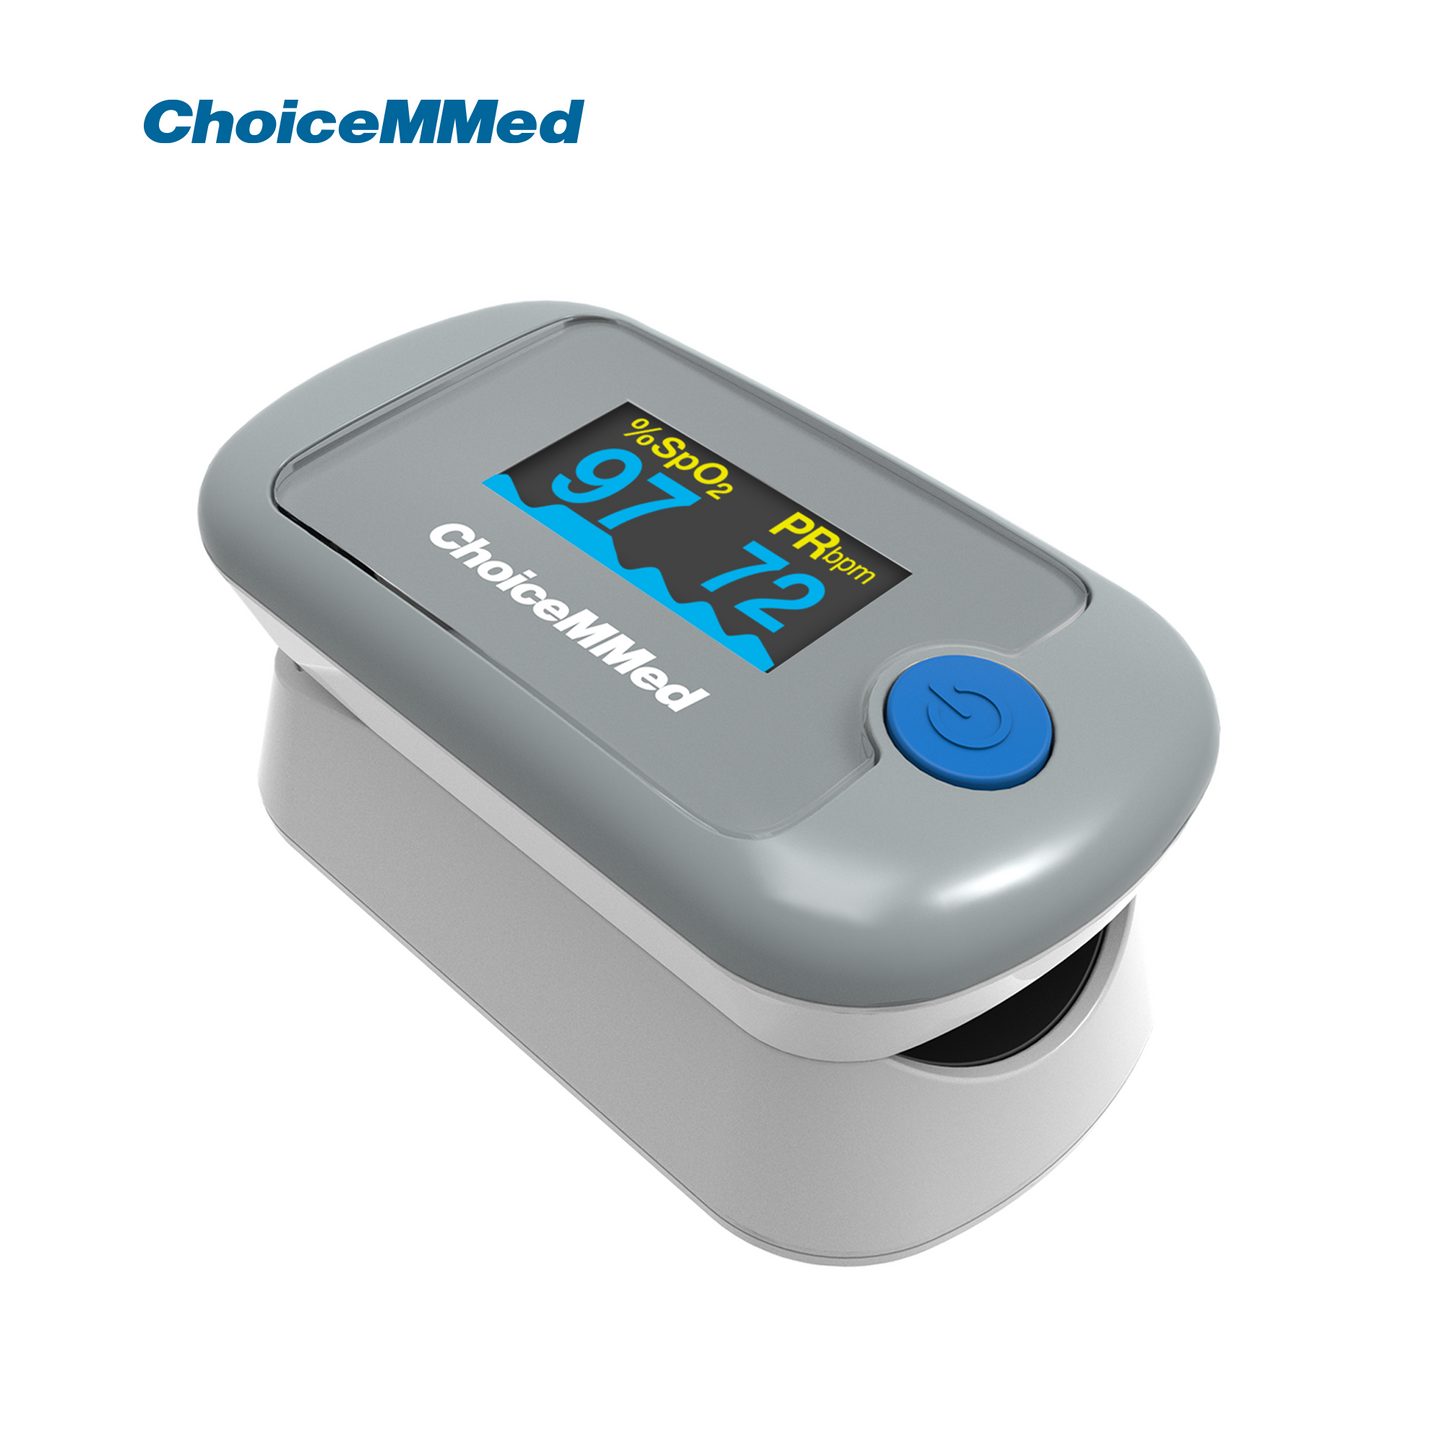 [Pedido anticipado]Oxímetro de pulso de dedo OLED MD300CN330 de ChoiceMMed